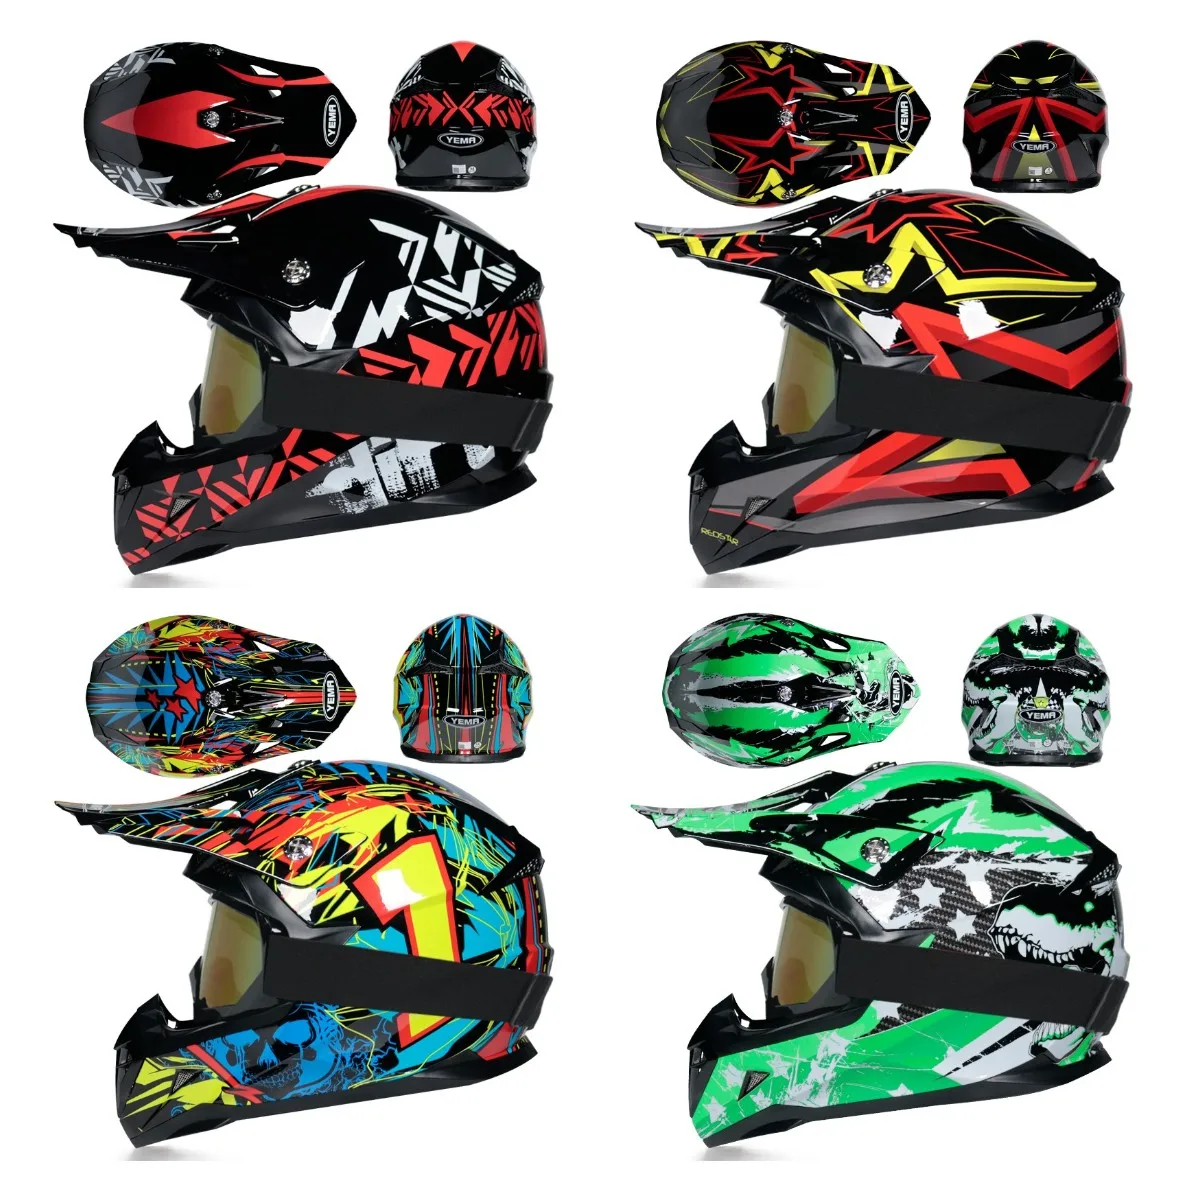 

Unisex Motorcycle helmet atv dirt bike cross motocross helmet Off-Road Ultralight Casque Motorcycle casco capacetes